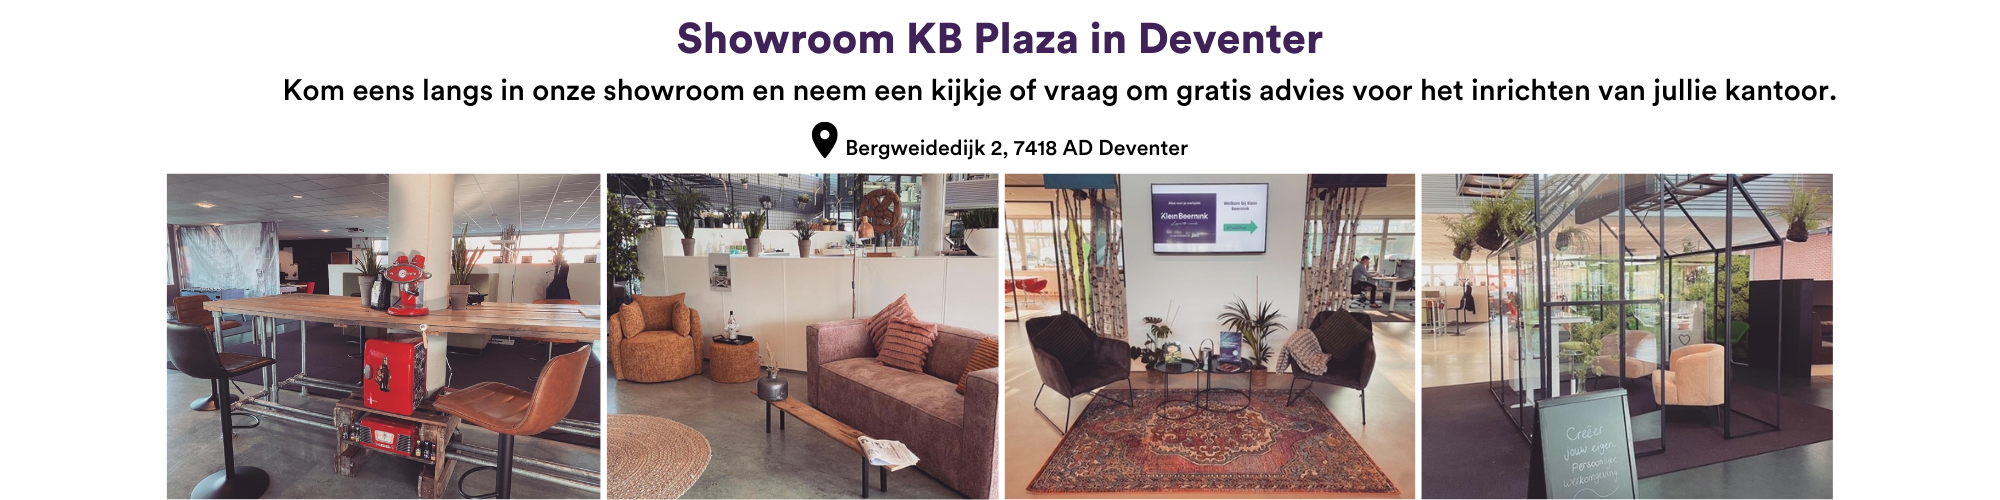 Showroom_KB_Plaza_in_Deventer_1.png